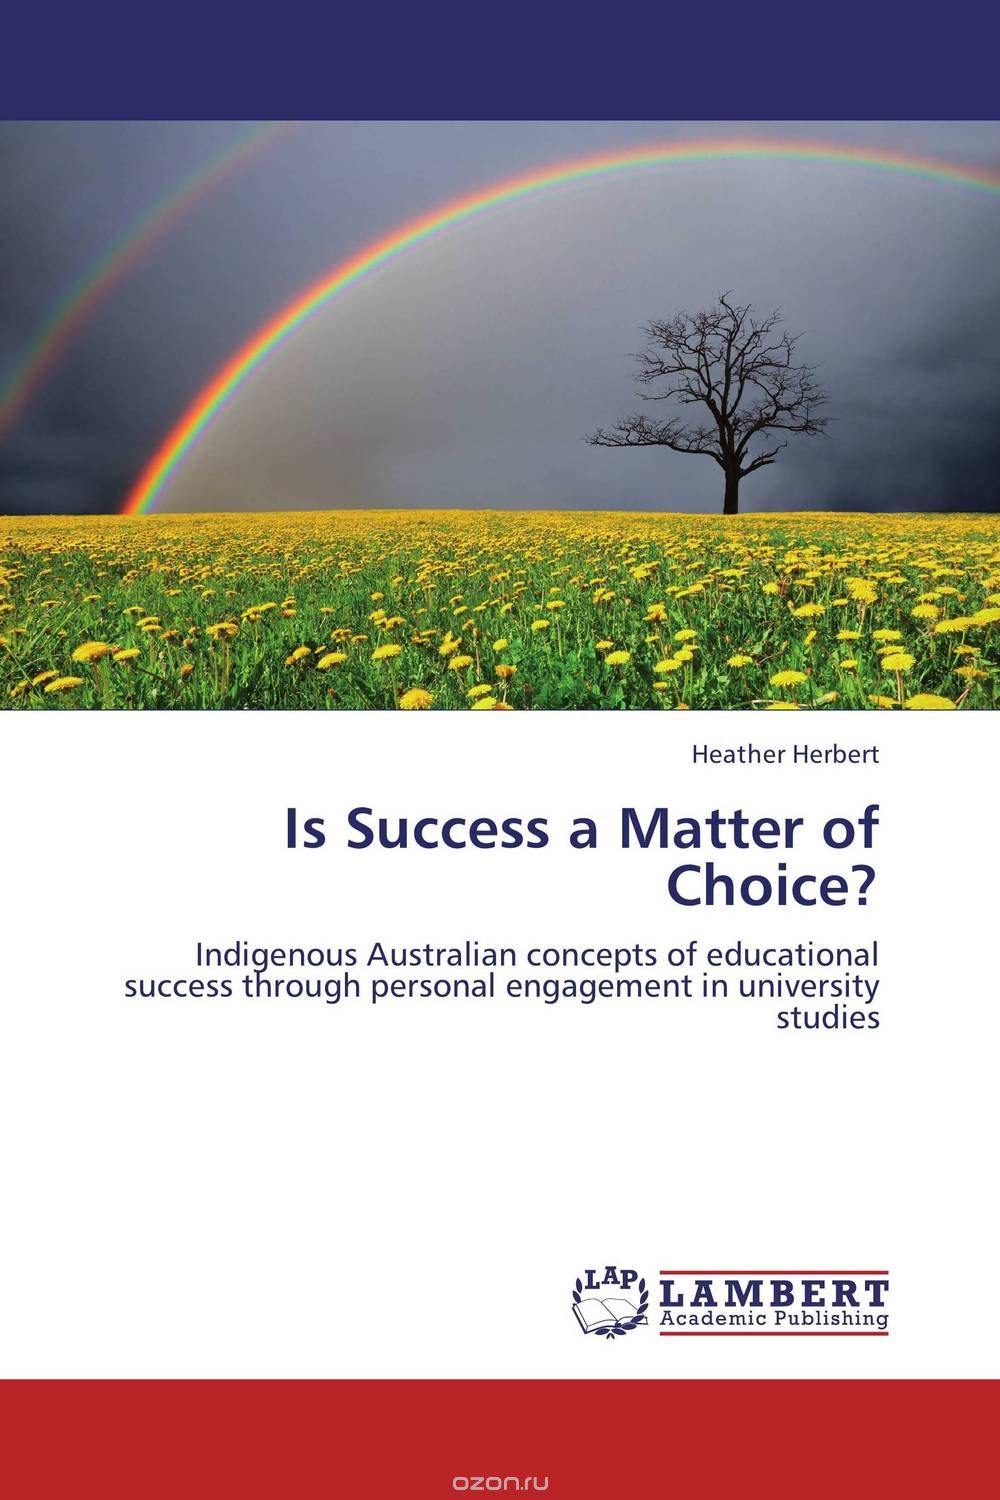 Скачать книгу "Is Success a Matter of Choice?"